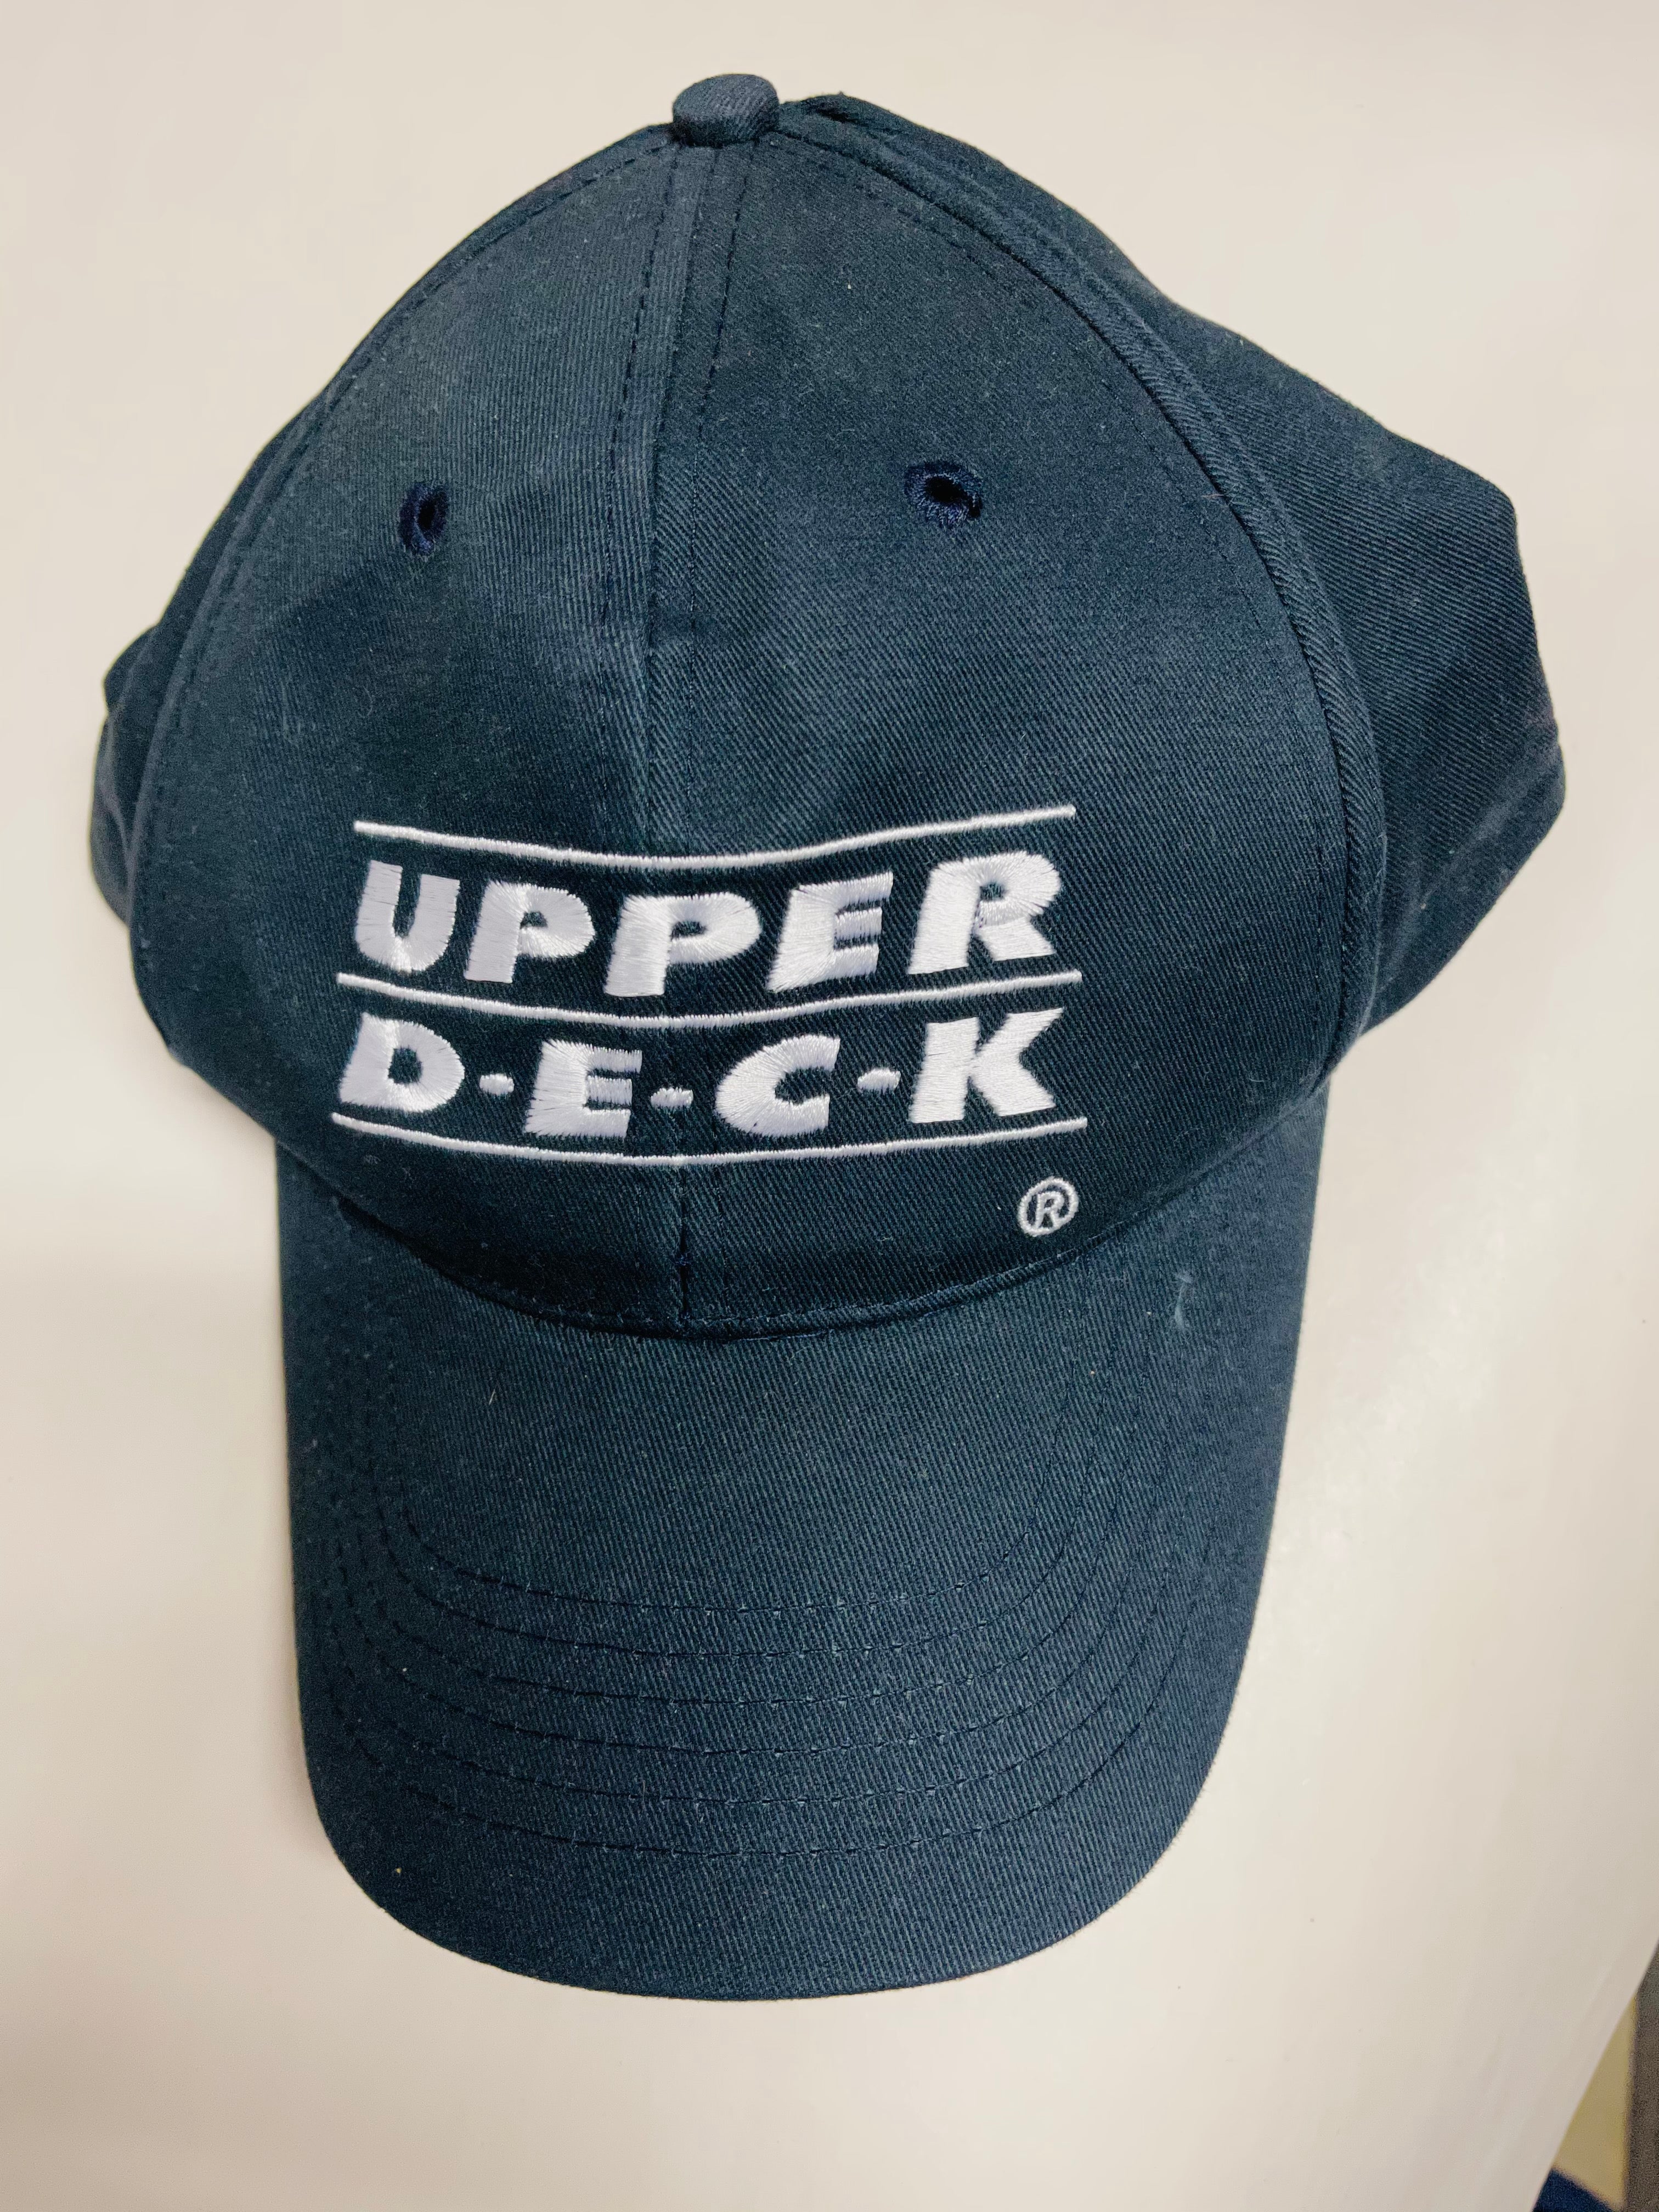 Upper Deck limited issued snap back baseball hat